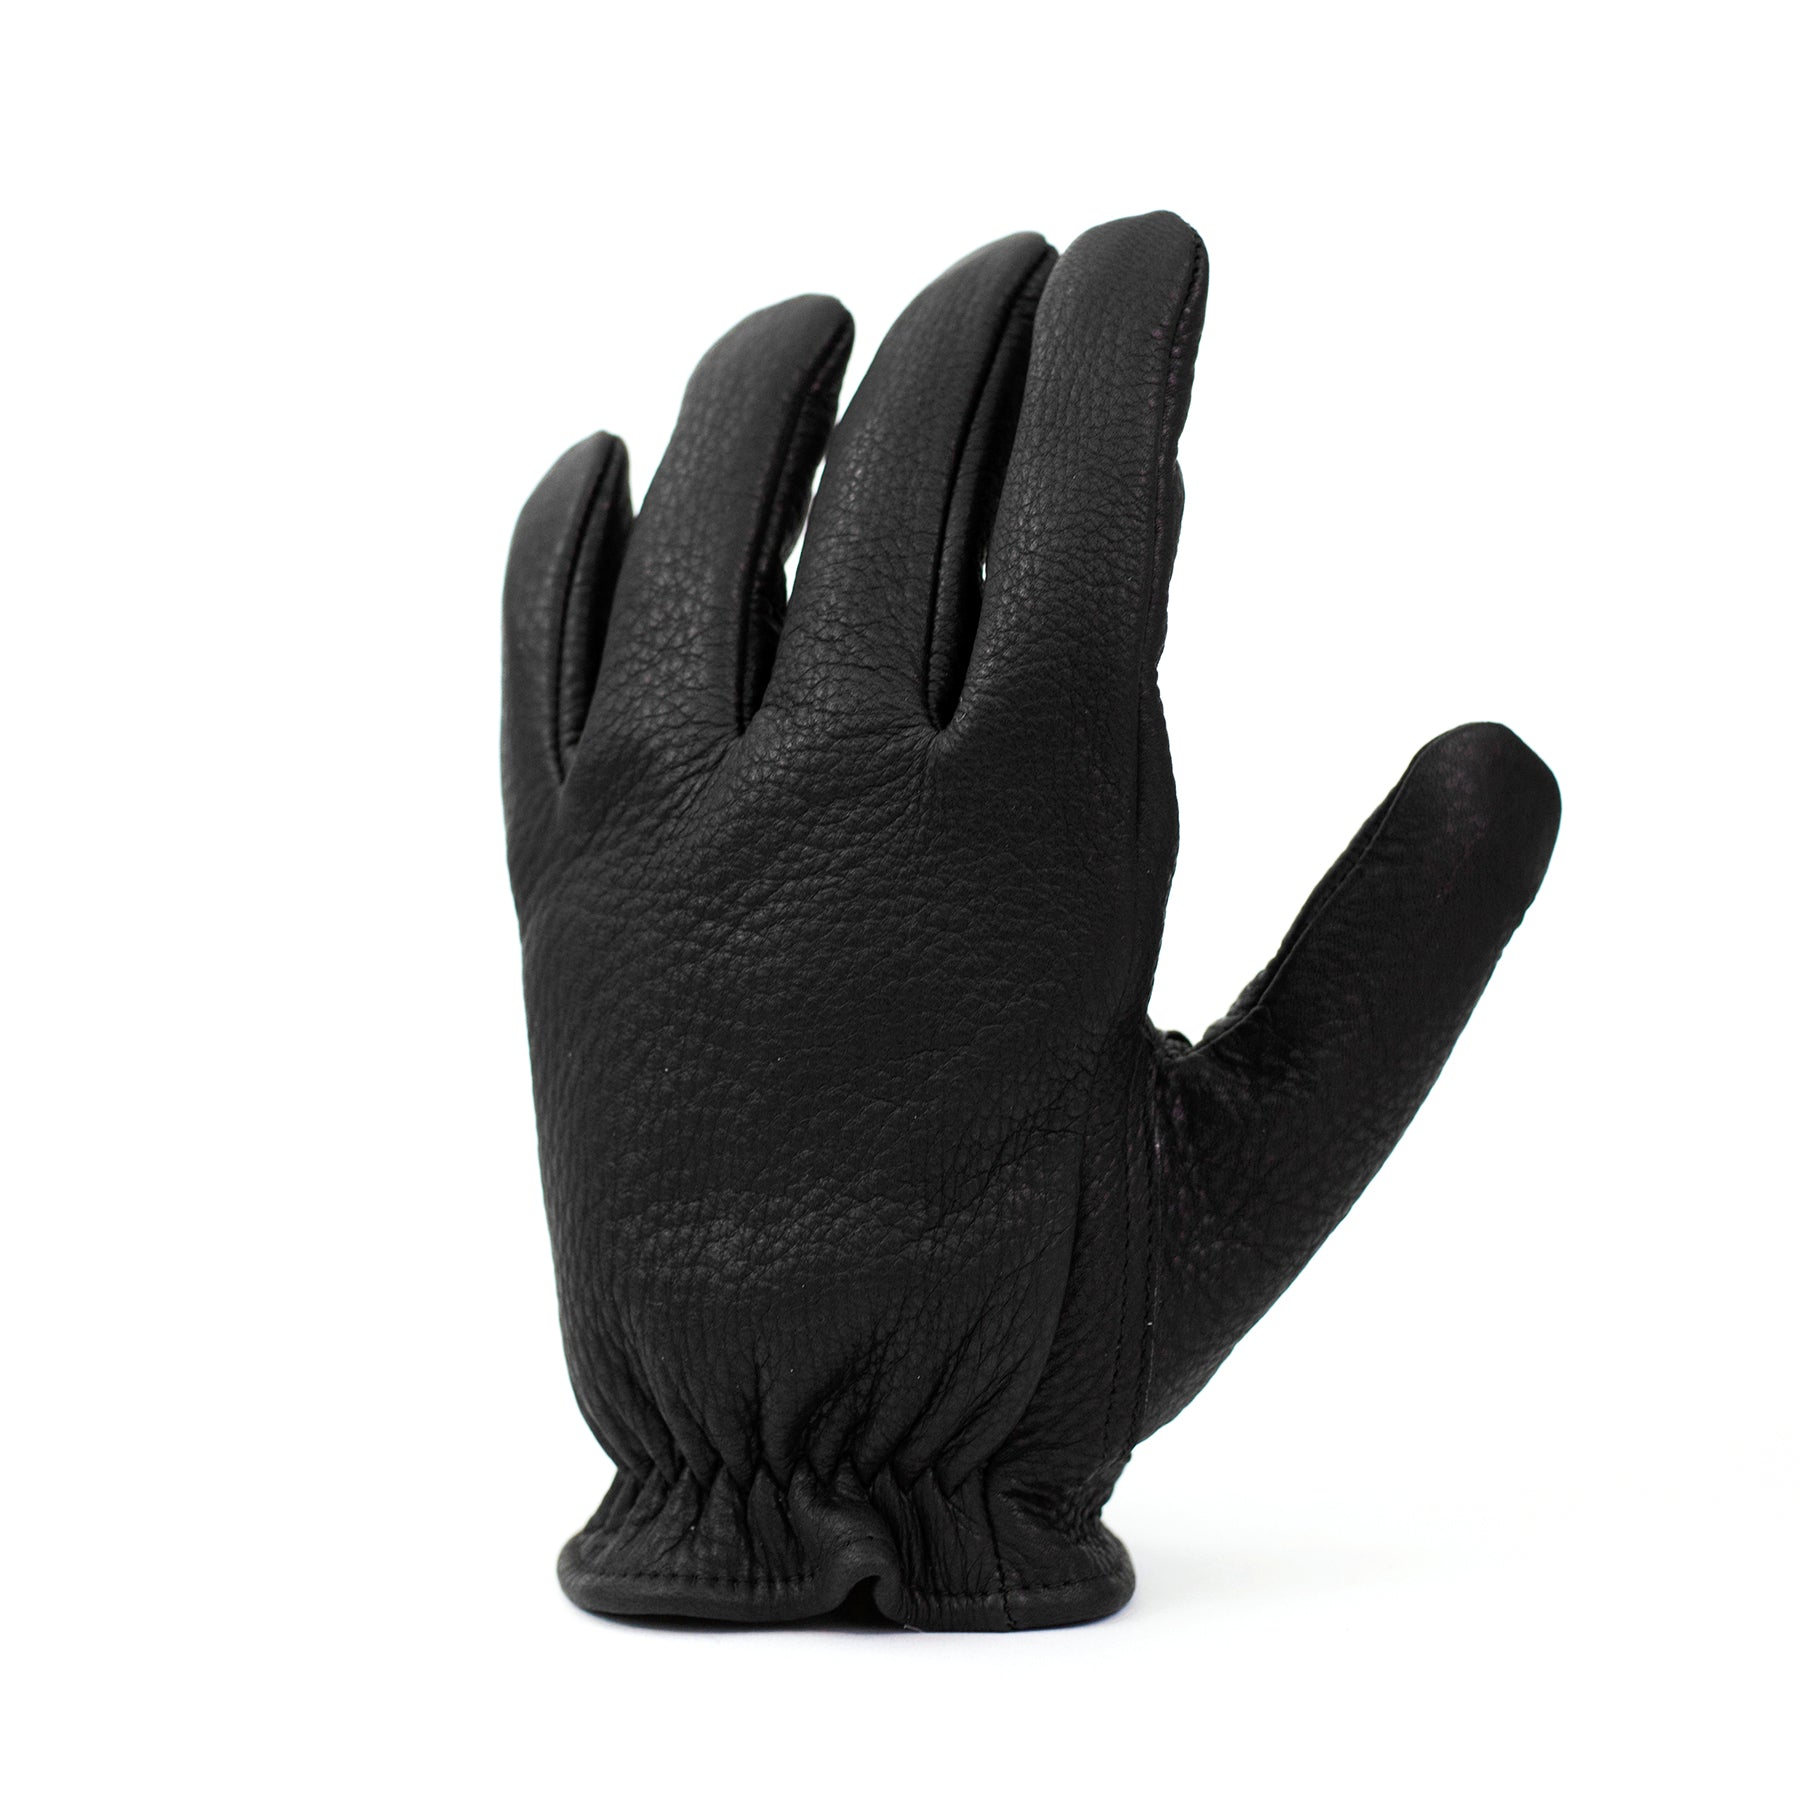 Kevlar gloves, moto gloves, leather glove, kevlar moto glove, kevlar lined gloves, black gloves, made in usa, red clouds gloves